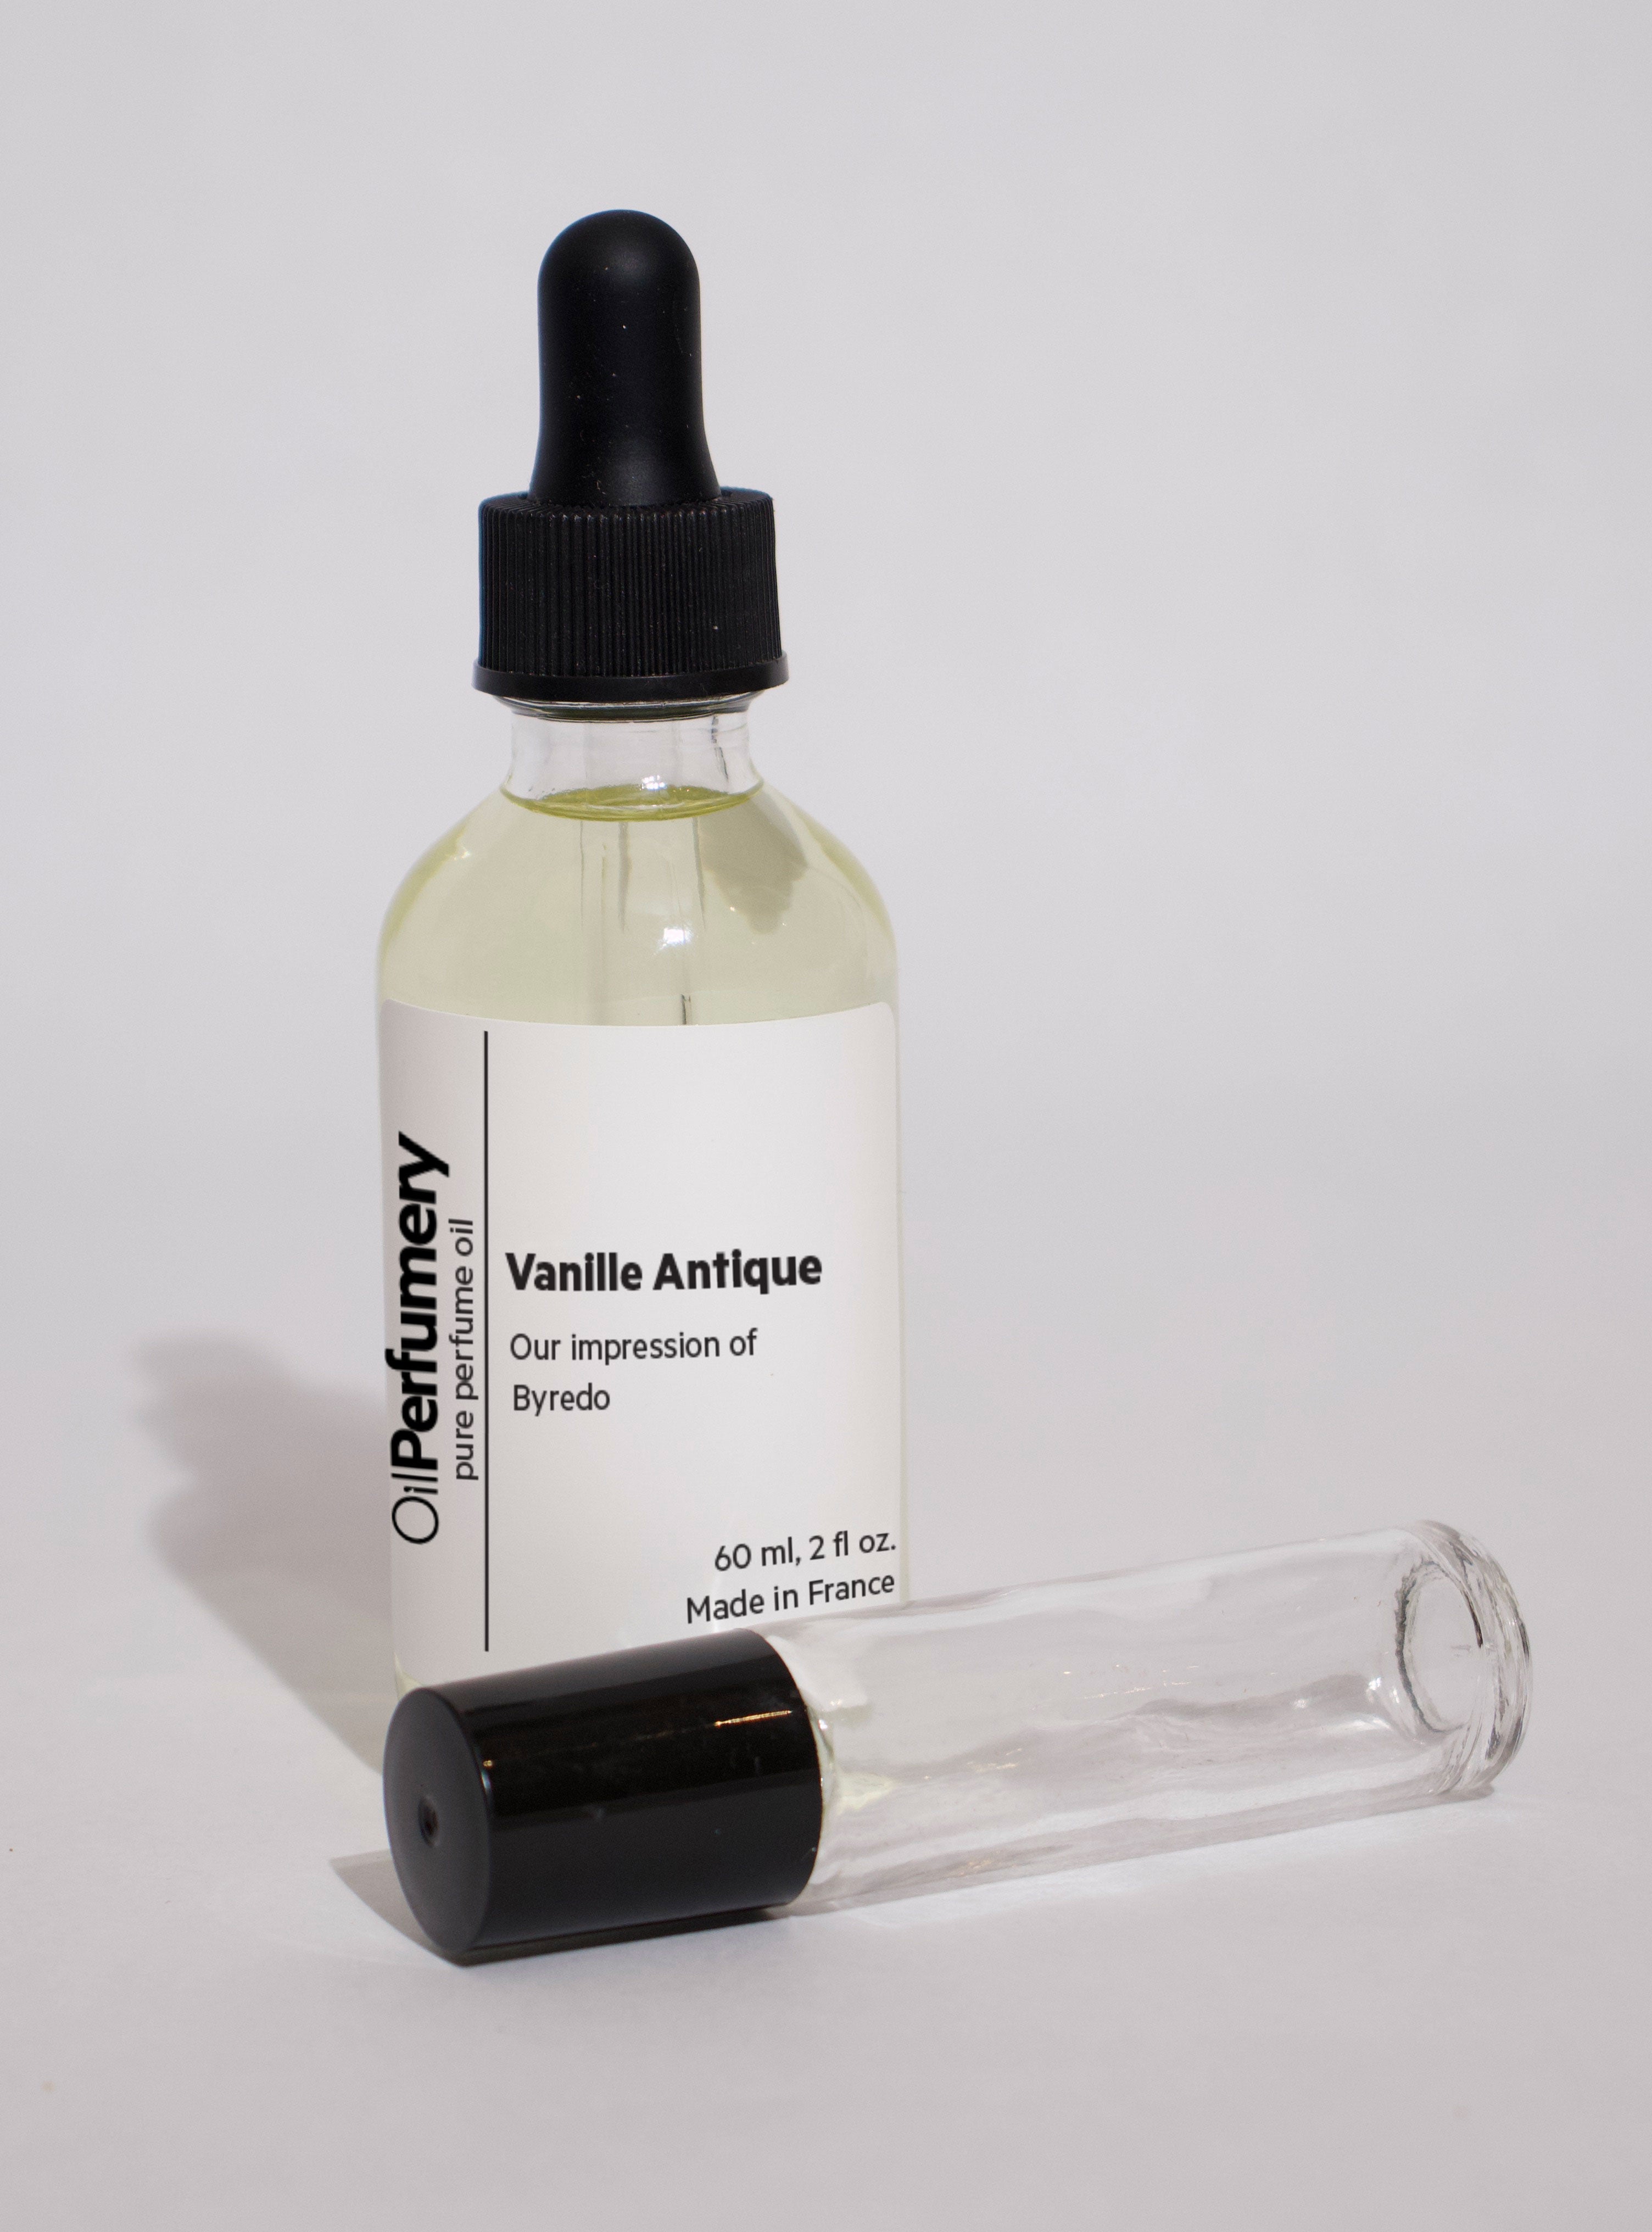 Oil Perfumery impression of Byredo - Vanille Antique